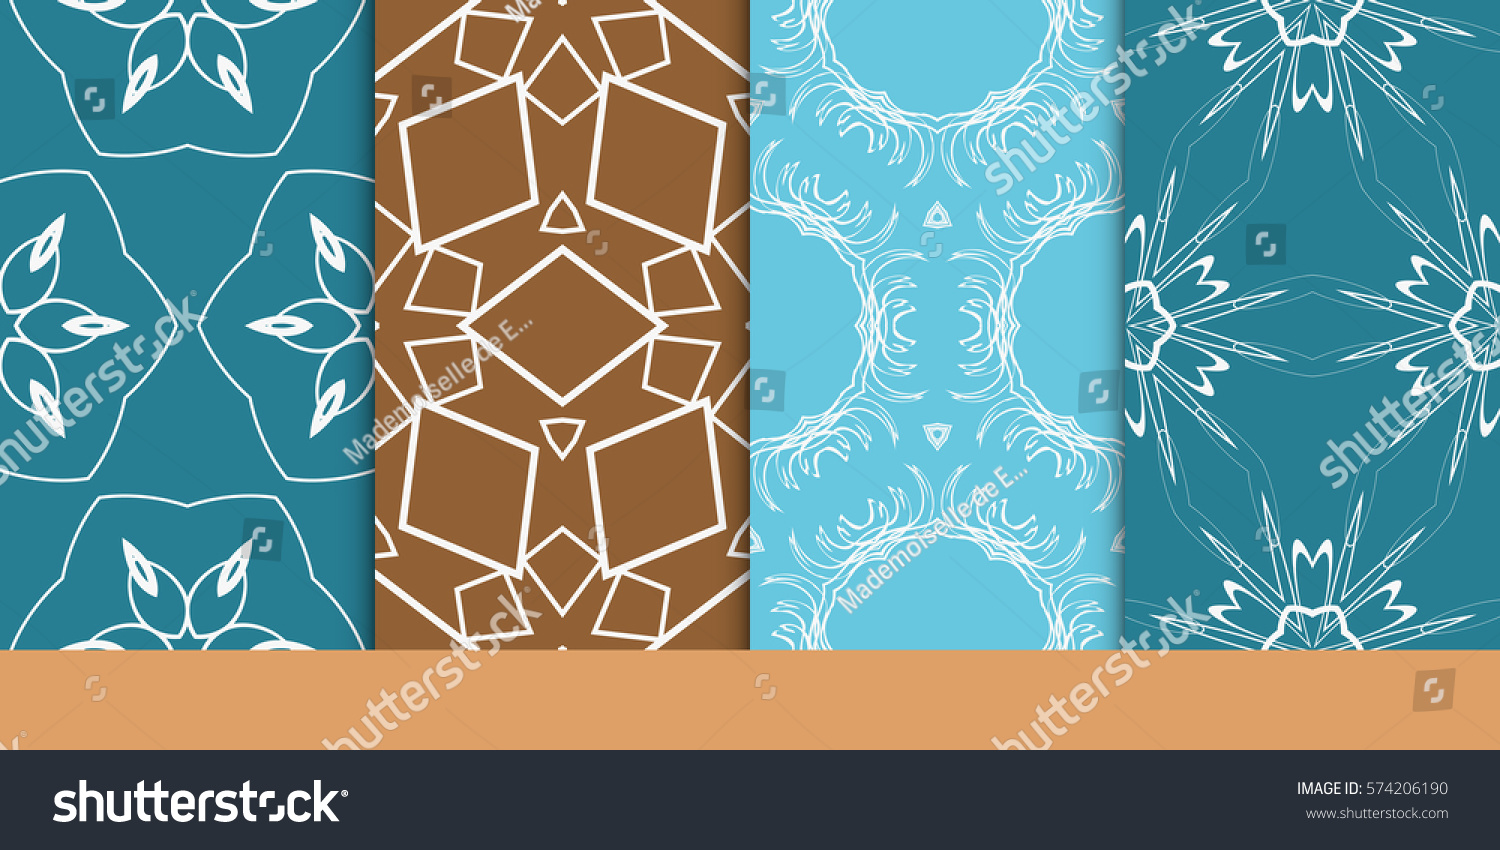 set of decorative floral seamless pattern. vector illustration. for invitation, greeting card, wallpaper, interior design #574206190